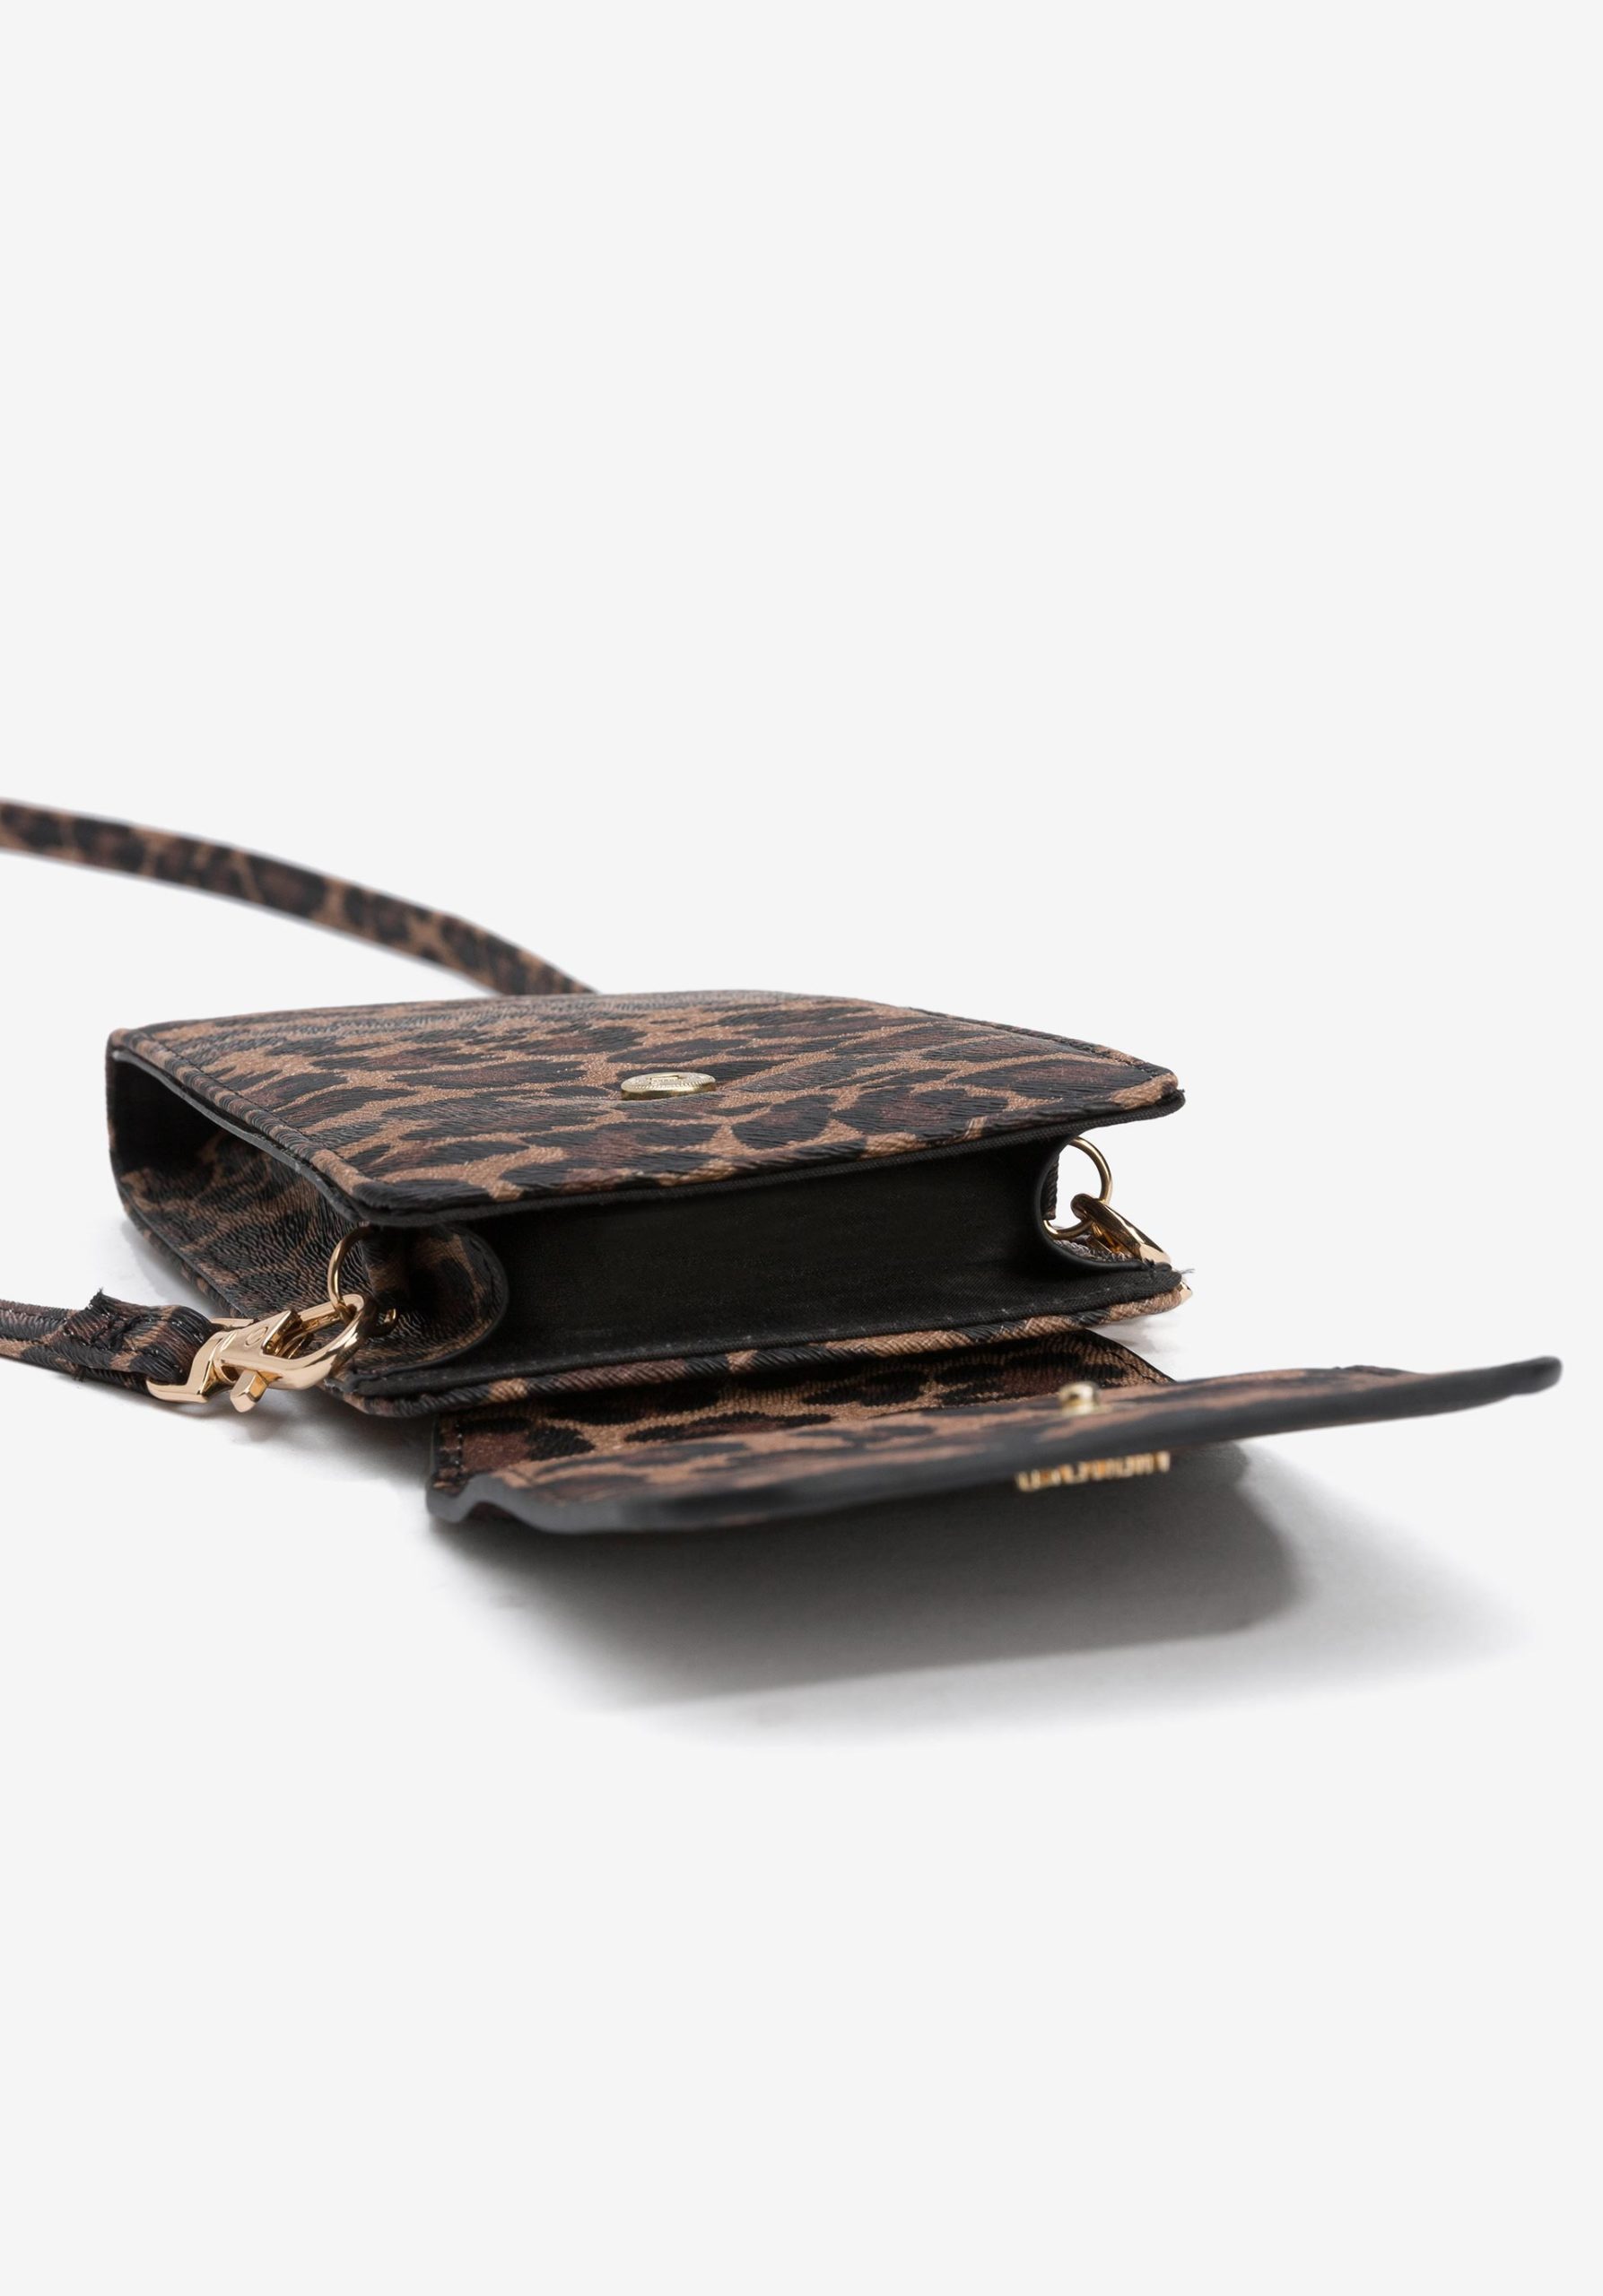 Bolso Cuelga móvil en acabado animal print marrón, modelo 71006790 de Vilanova.